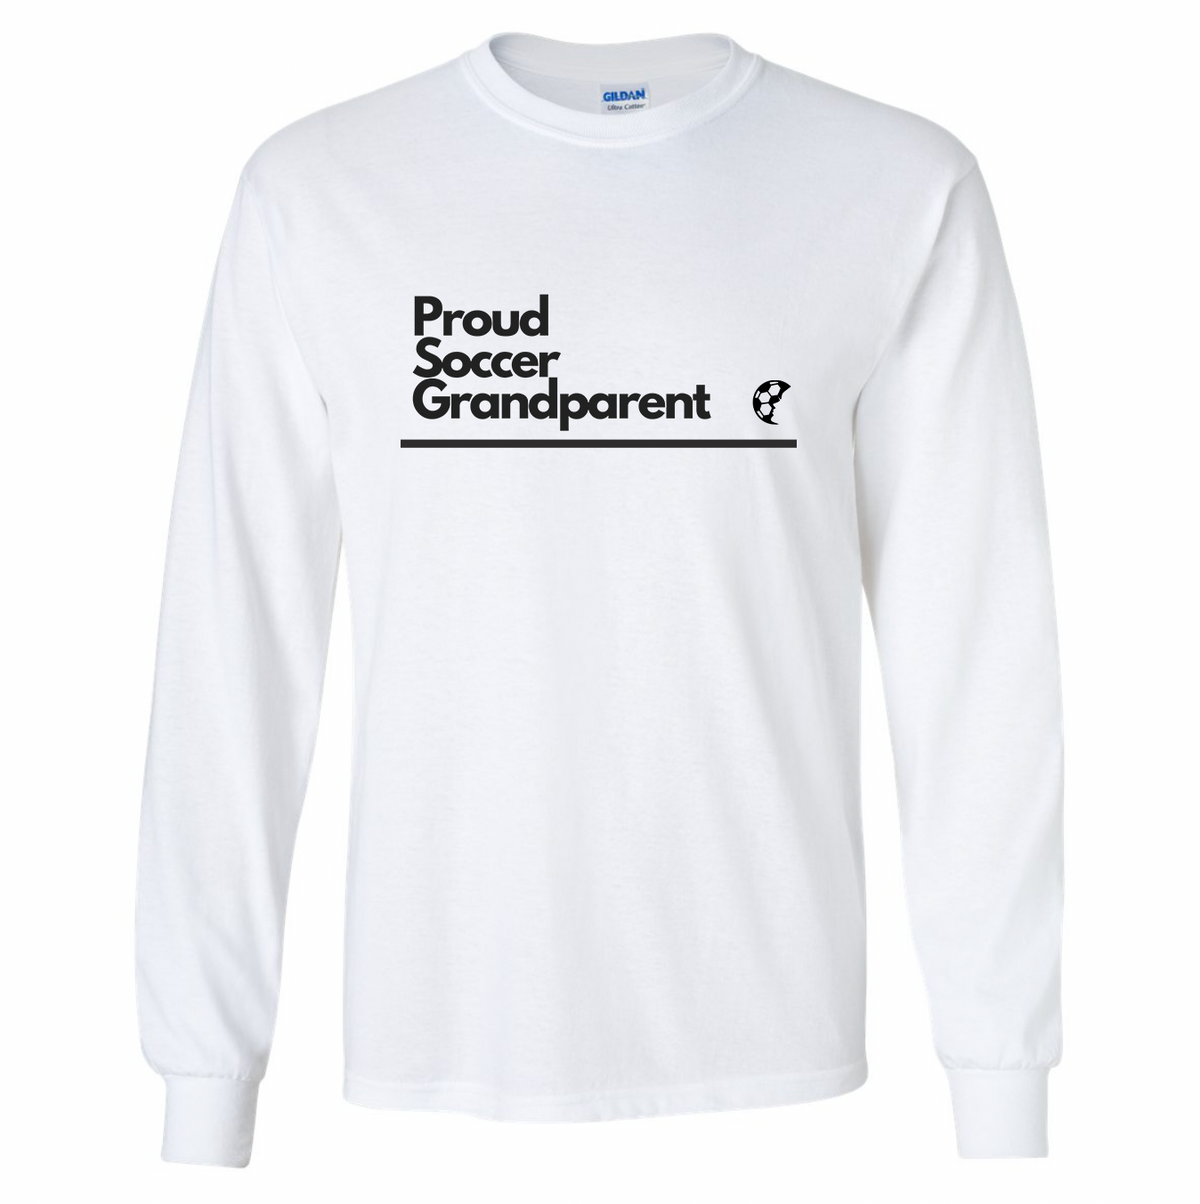 Proud Soccer Grandparent Shirt